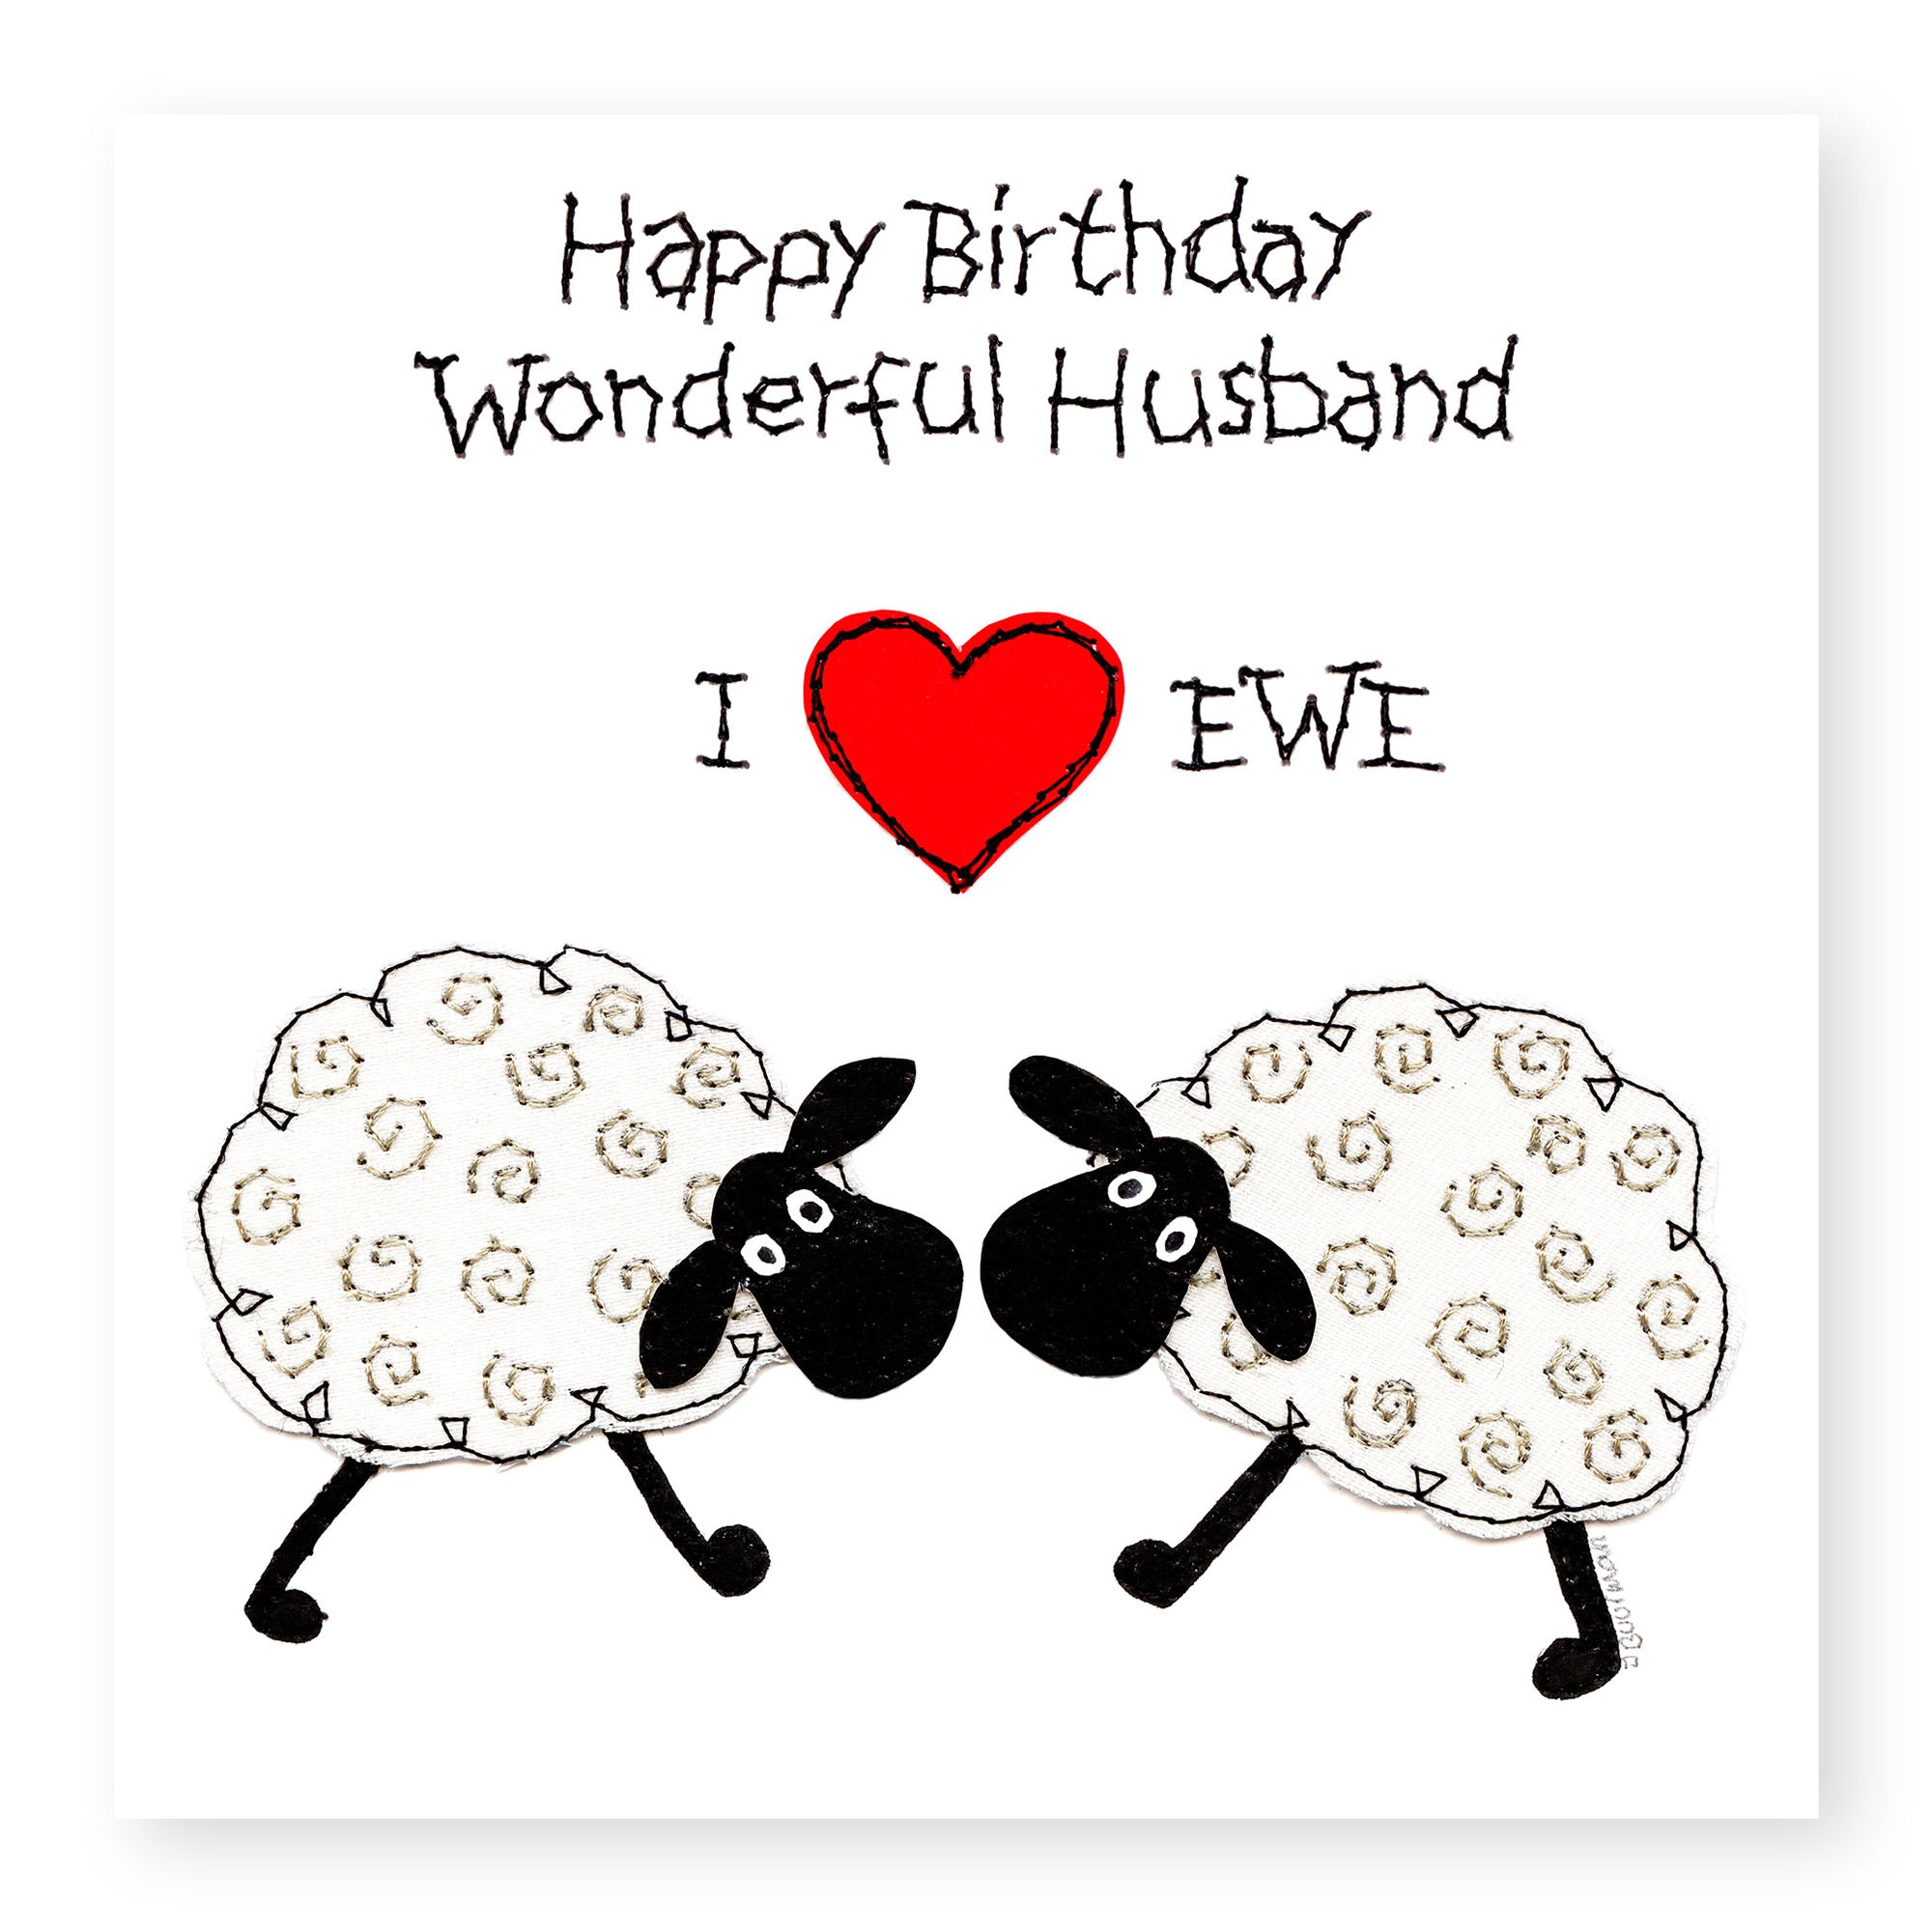 Love Ewe Wonderful Husband Birthday Card from Penny Black